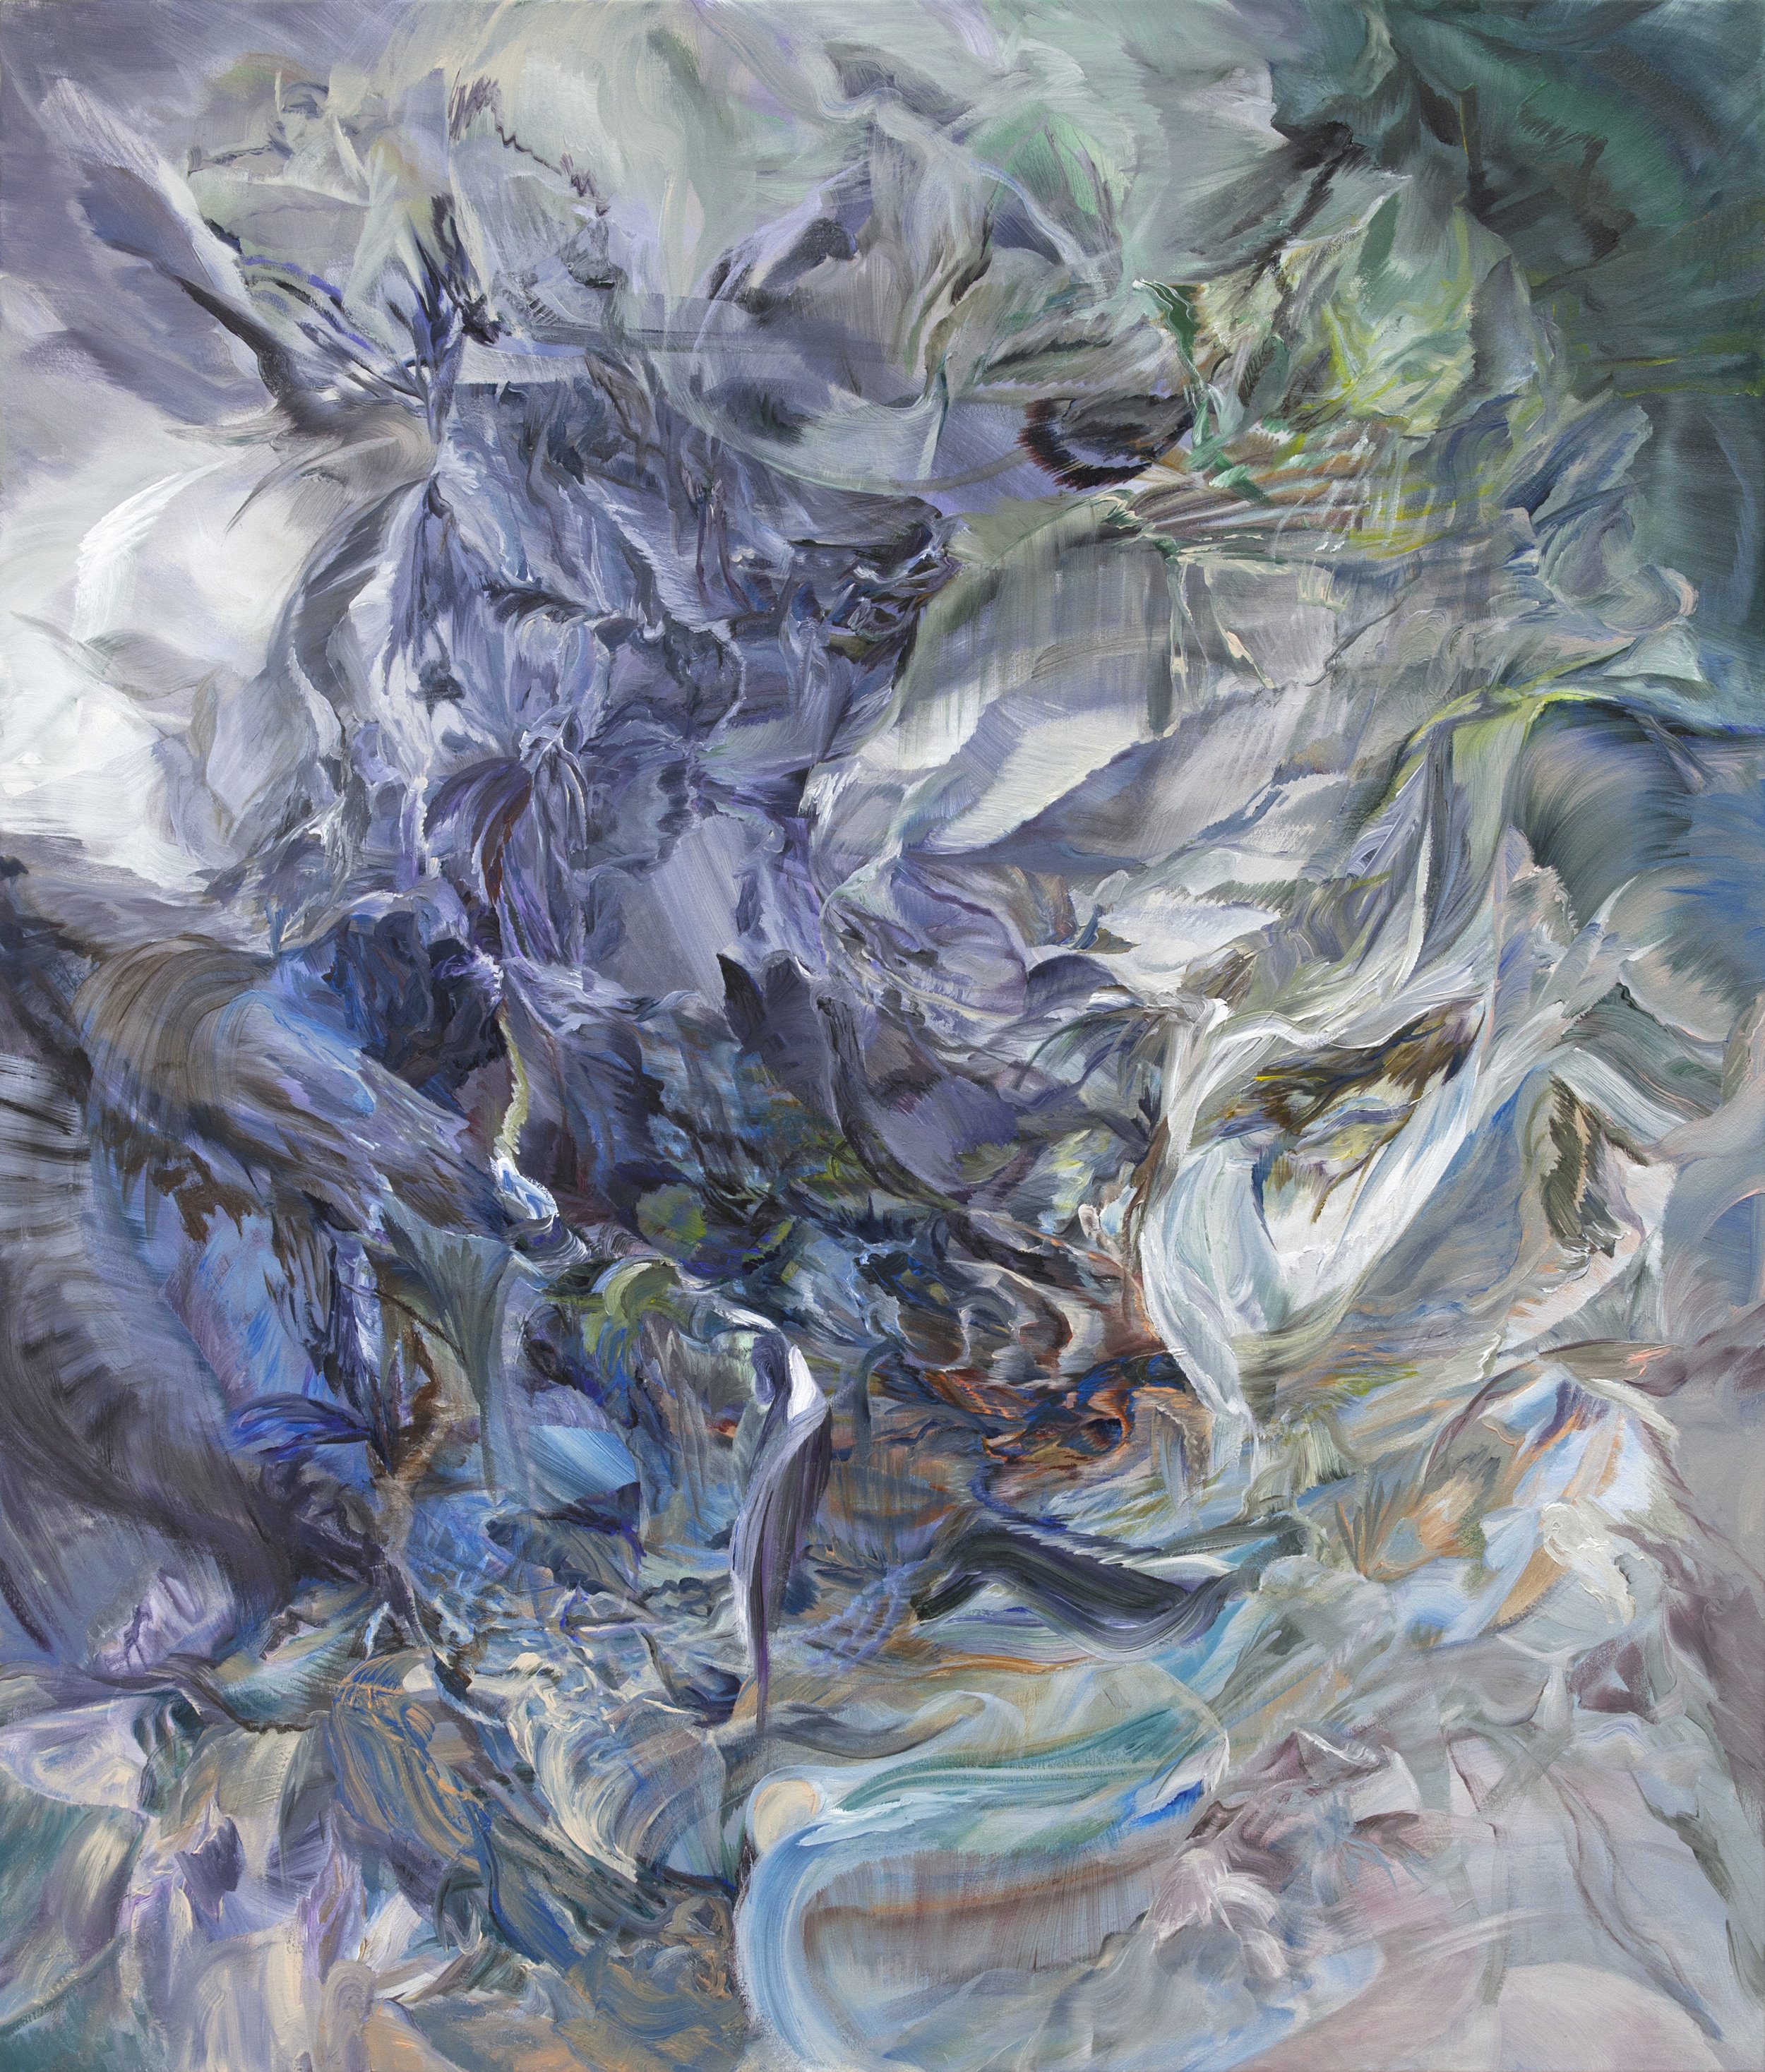  Leviathan’s Wake  acrylic on canvas  54” x 46” 